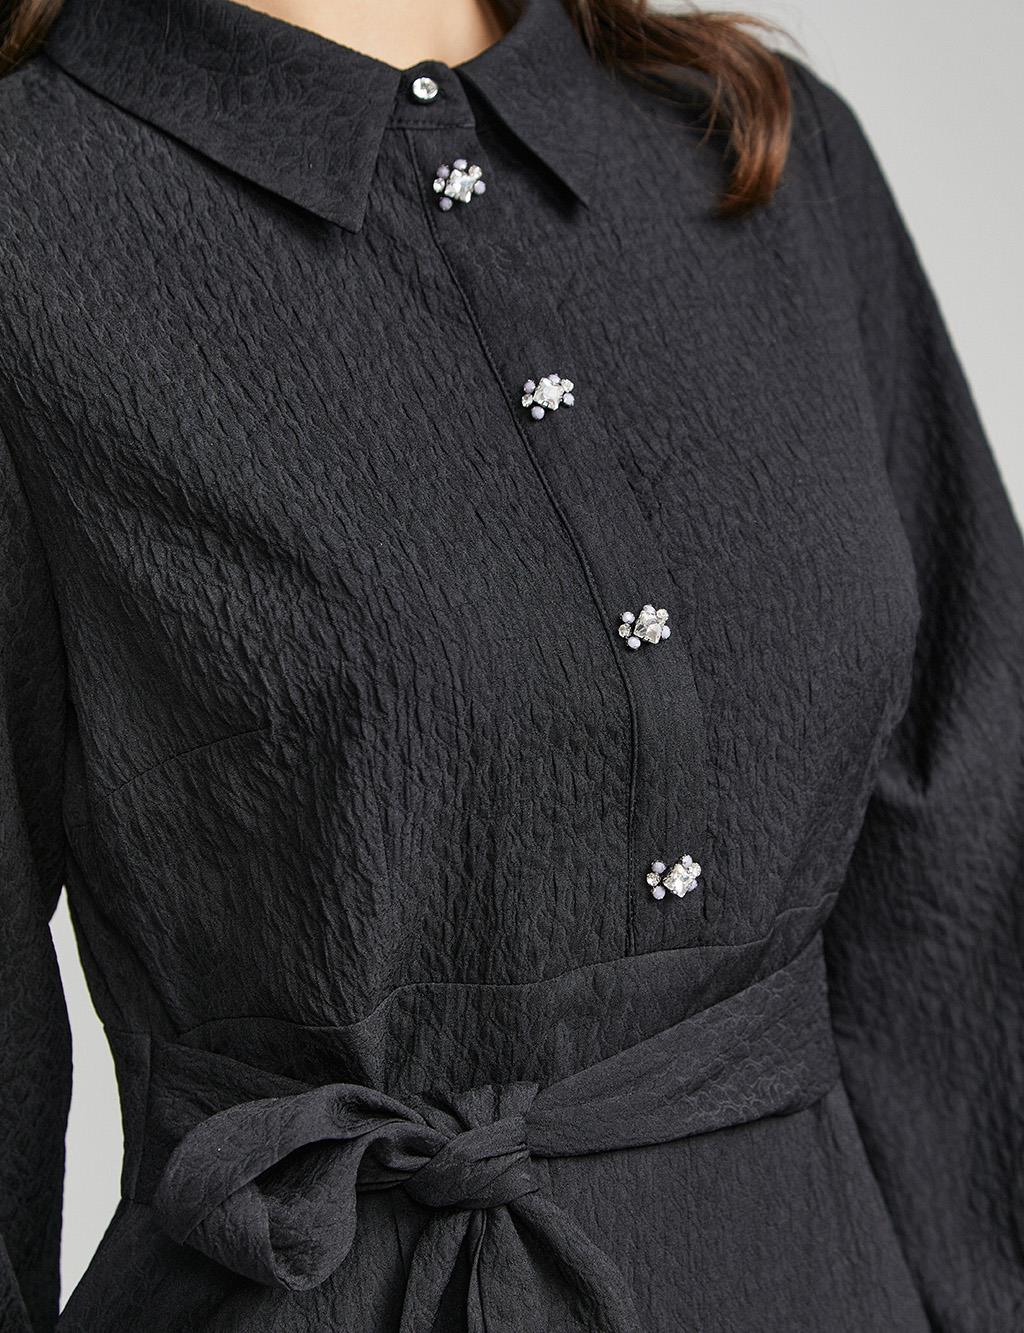 Textured Belted Dress Black